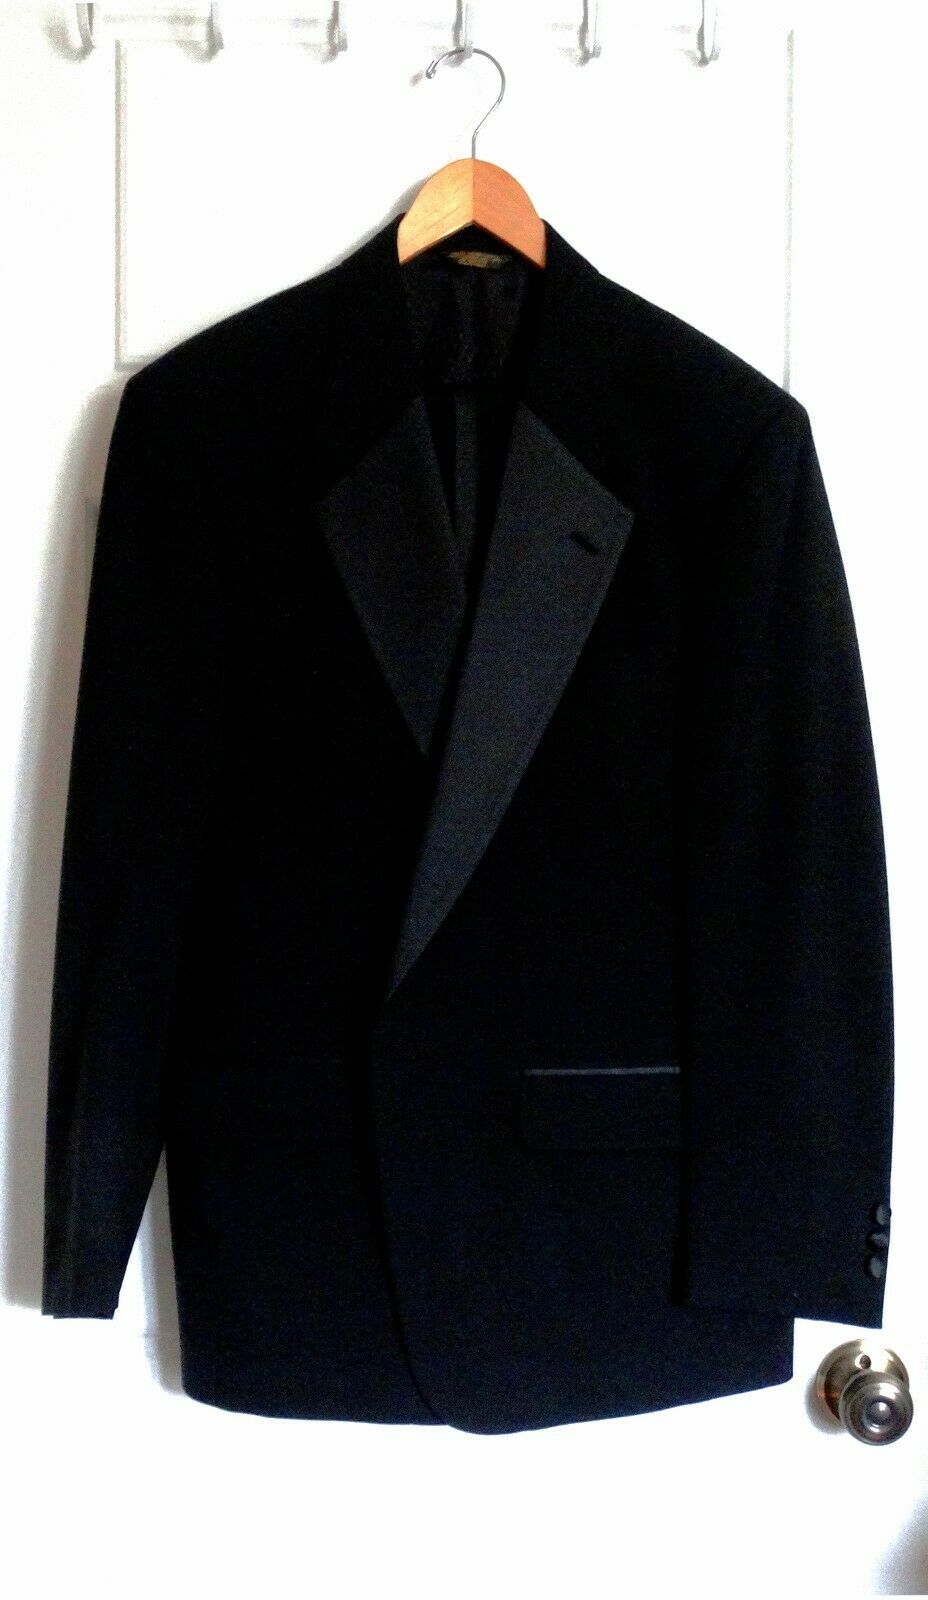 Bill Blass classic black wool tuxedo, perfect condition. Jacket 40R pants 36x30